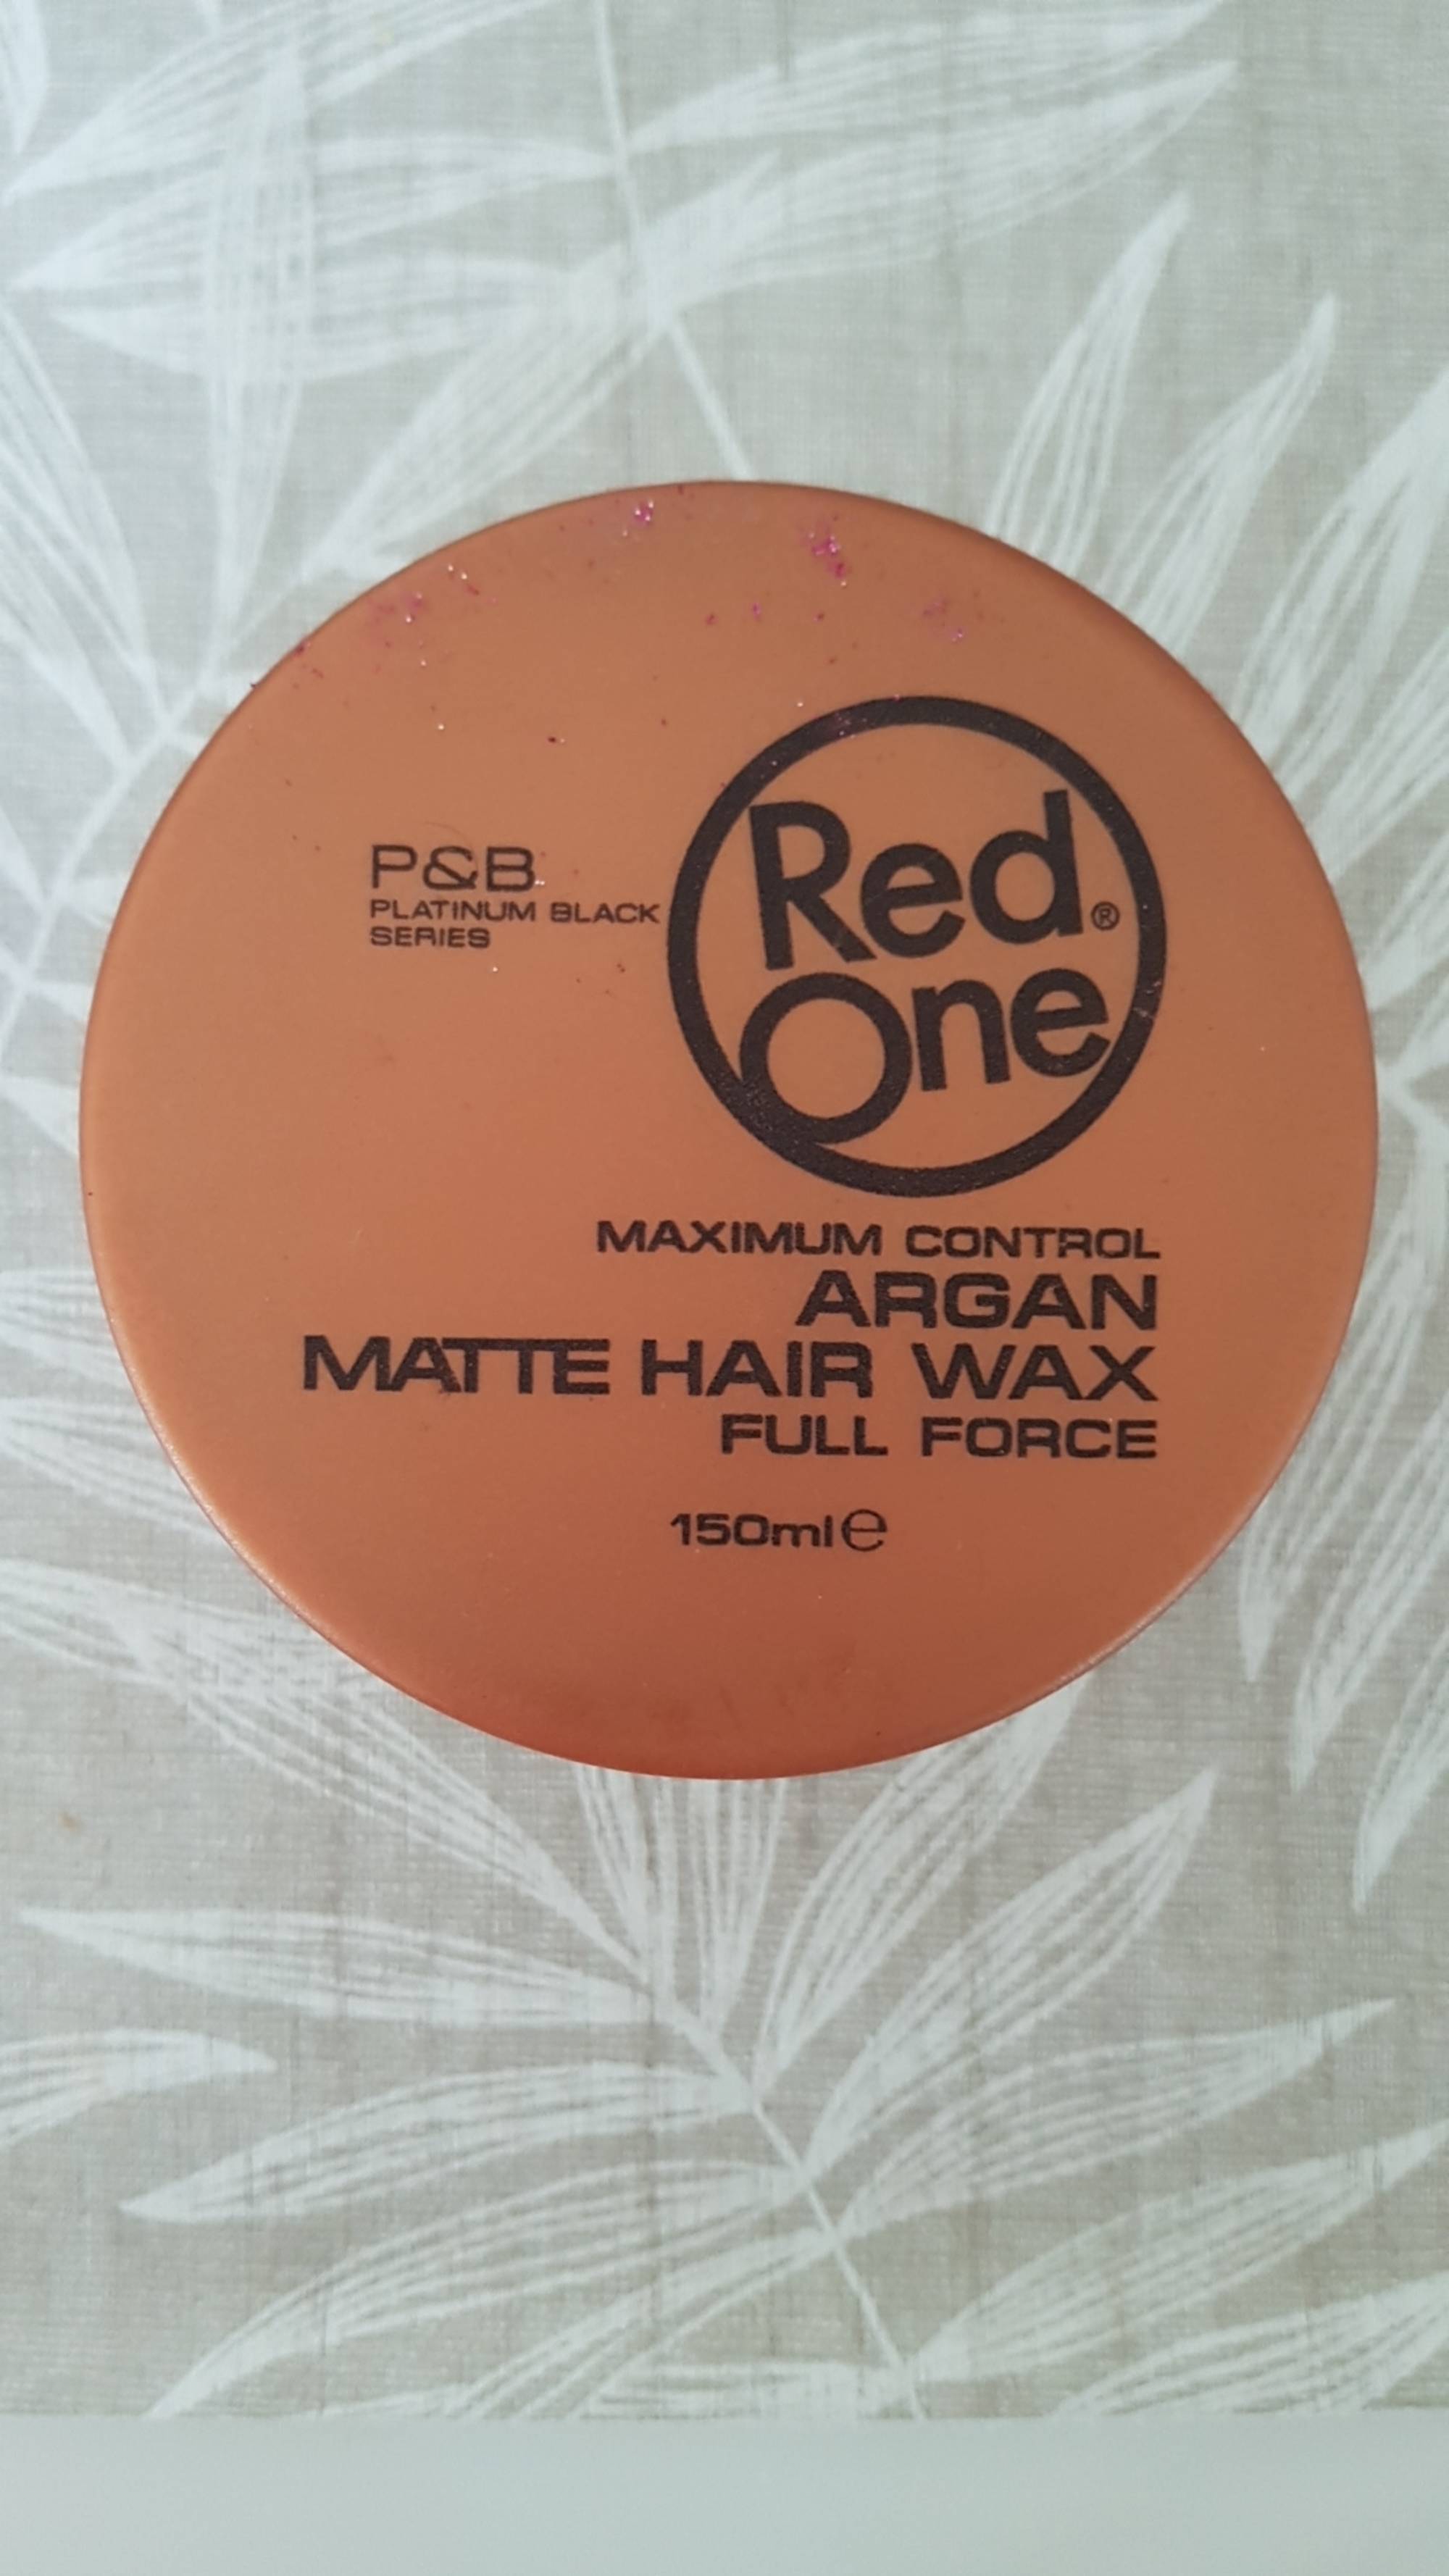 RED ONE - Argan matte hair wax full force